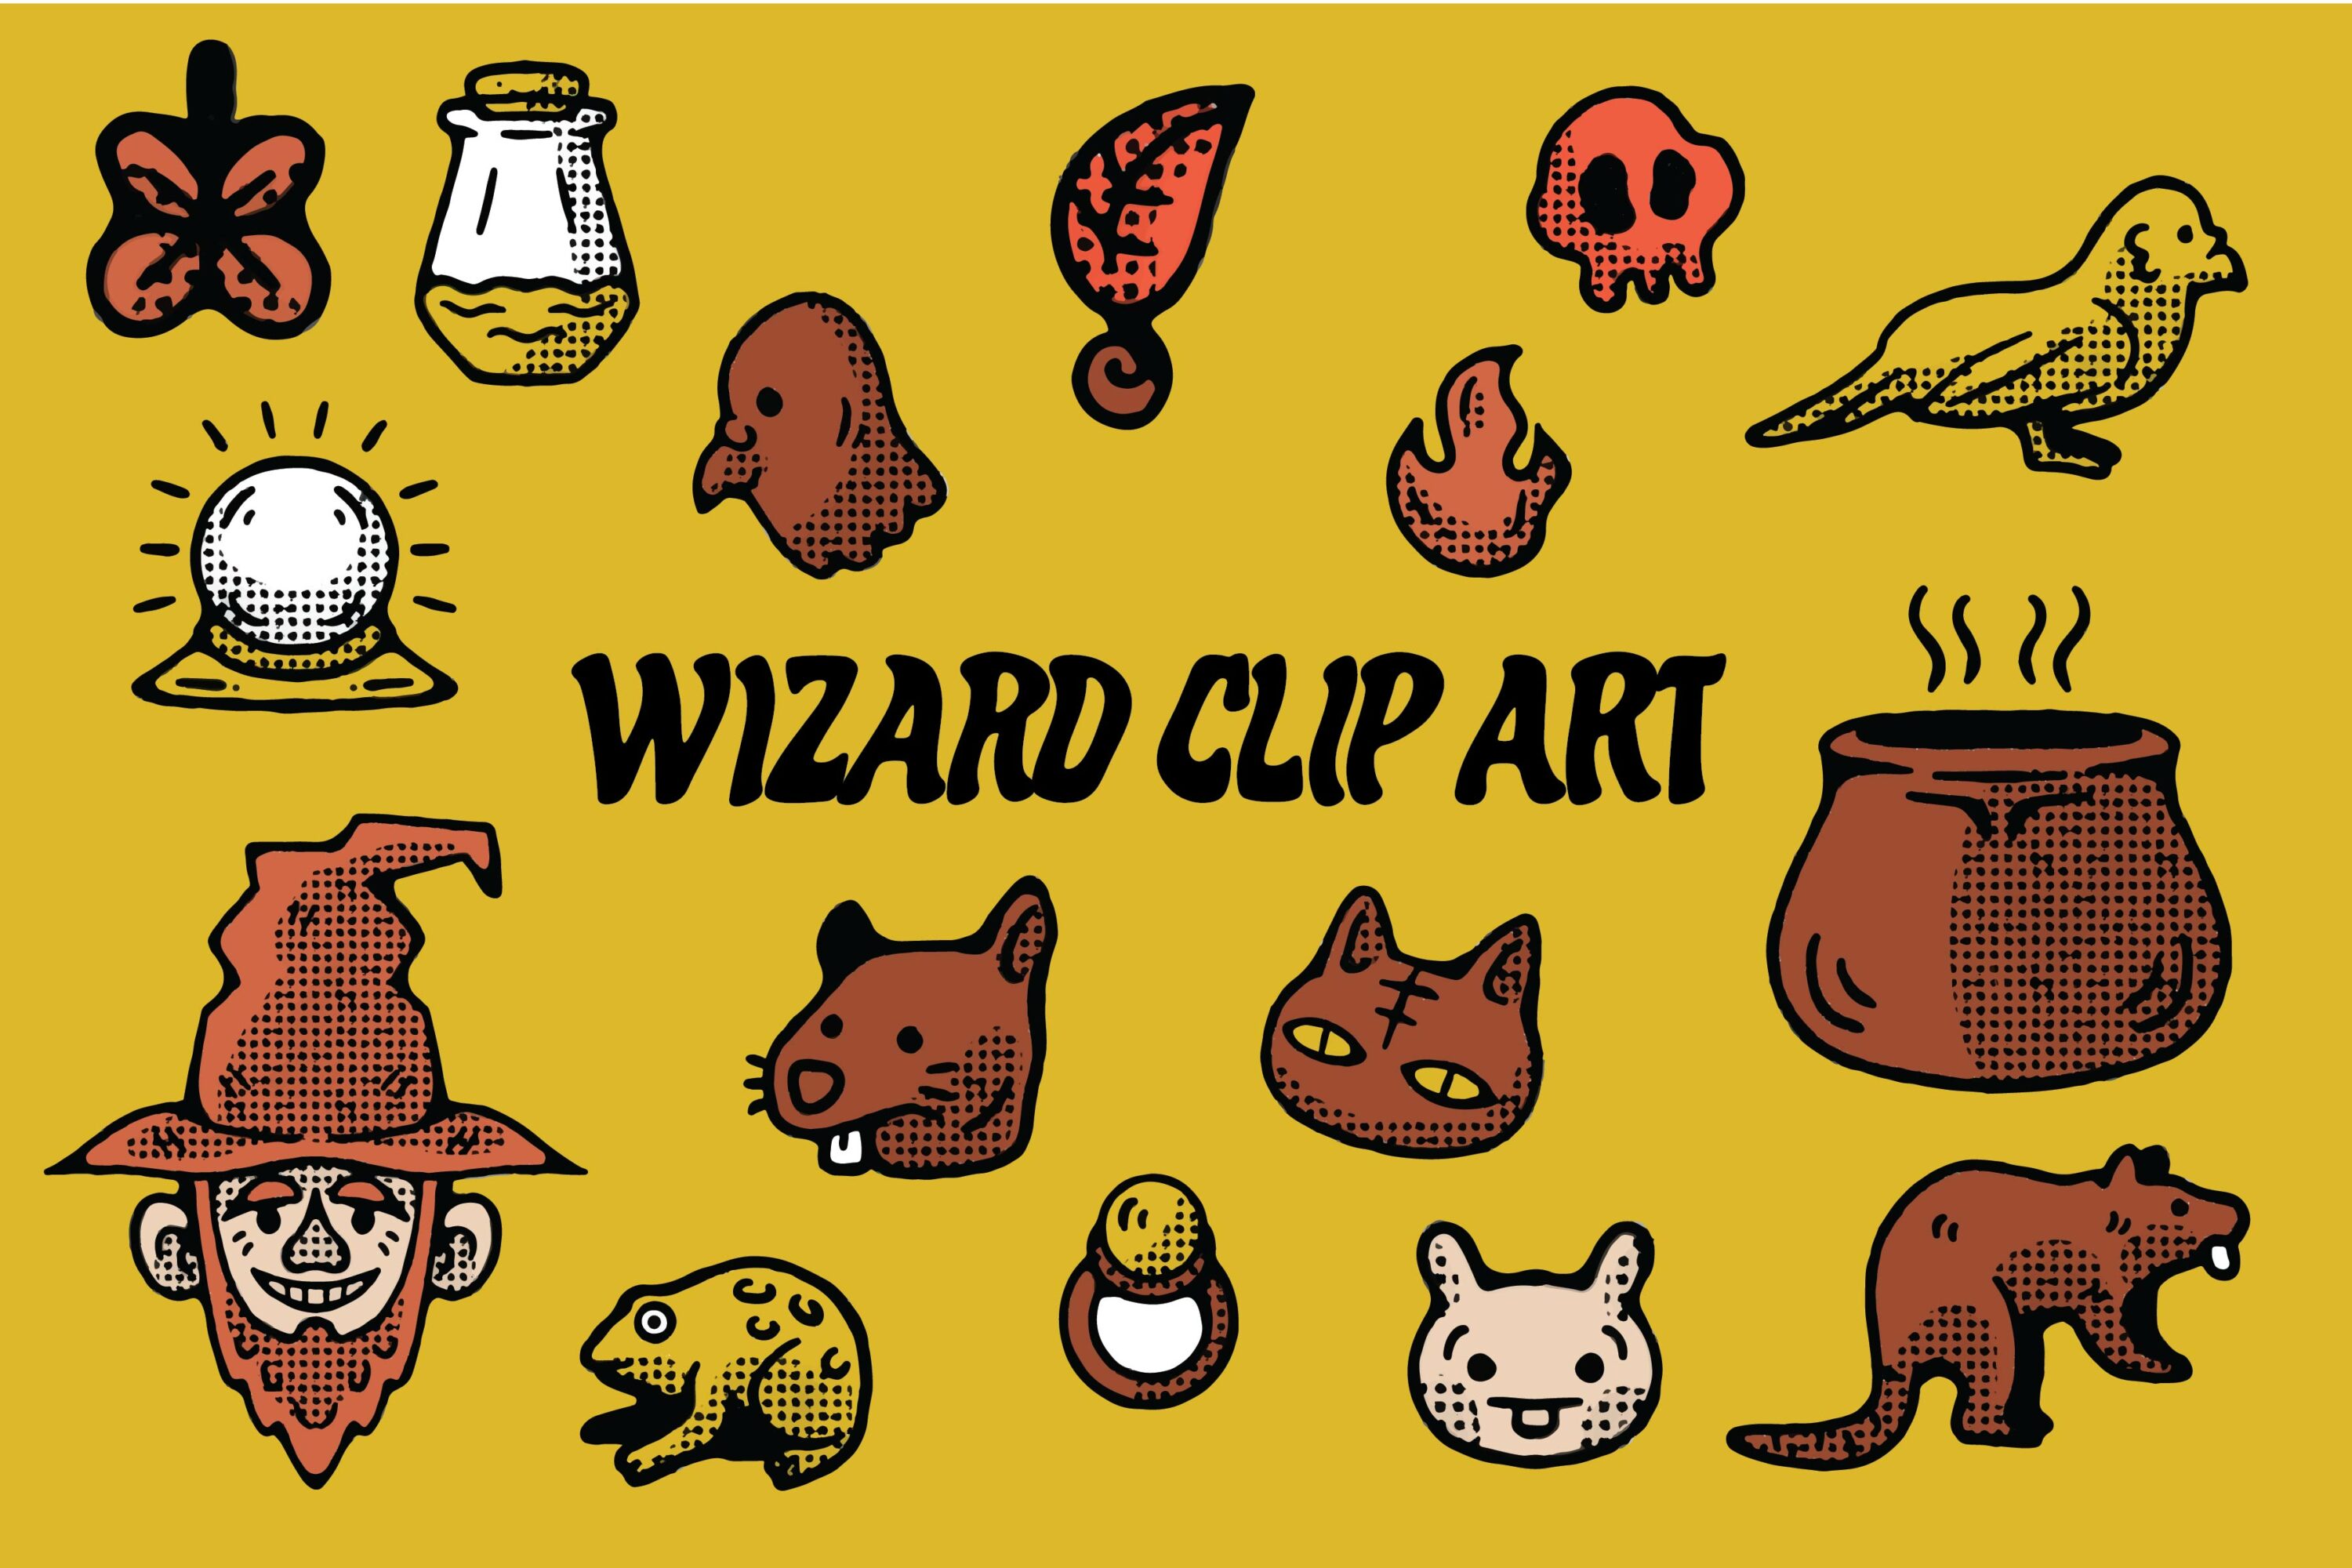 Wizard Doodles Clip Art Facebook Image.